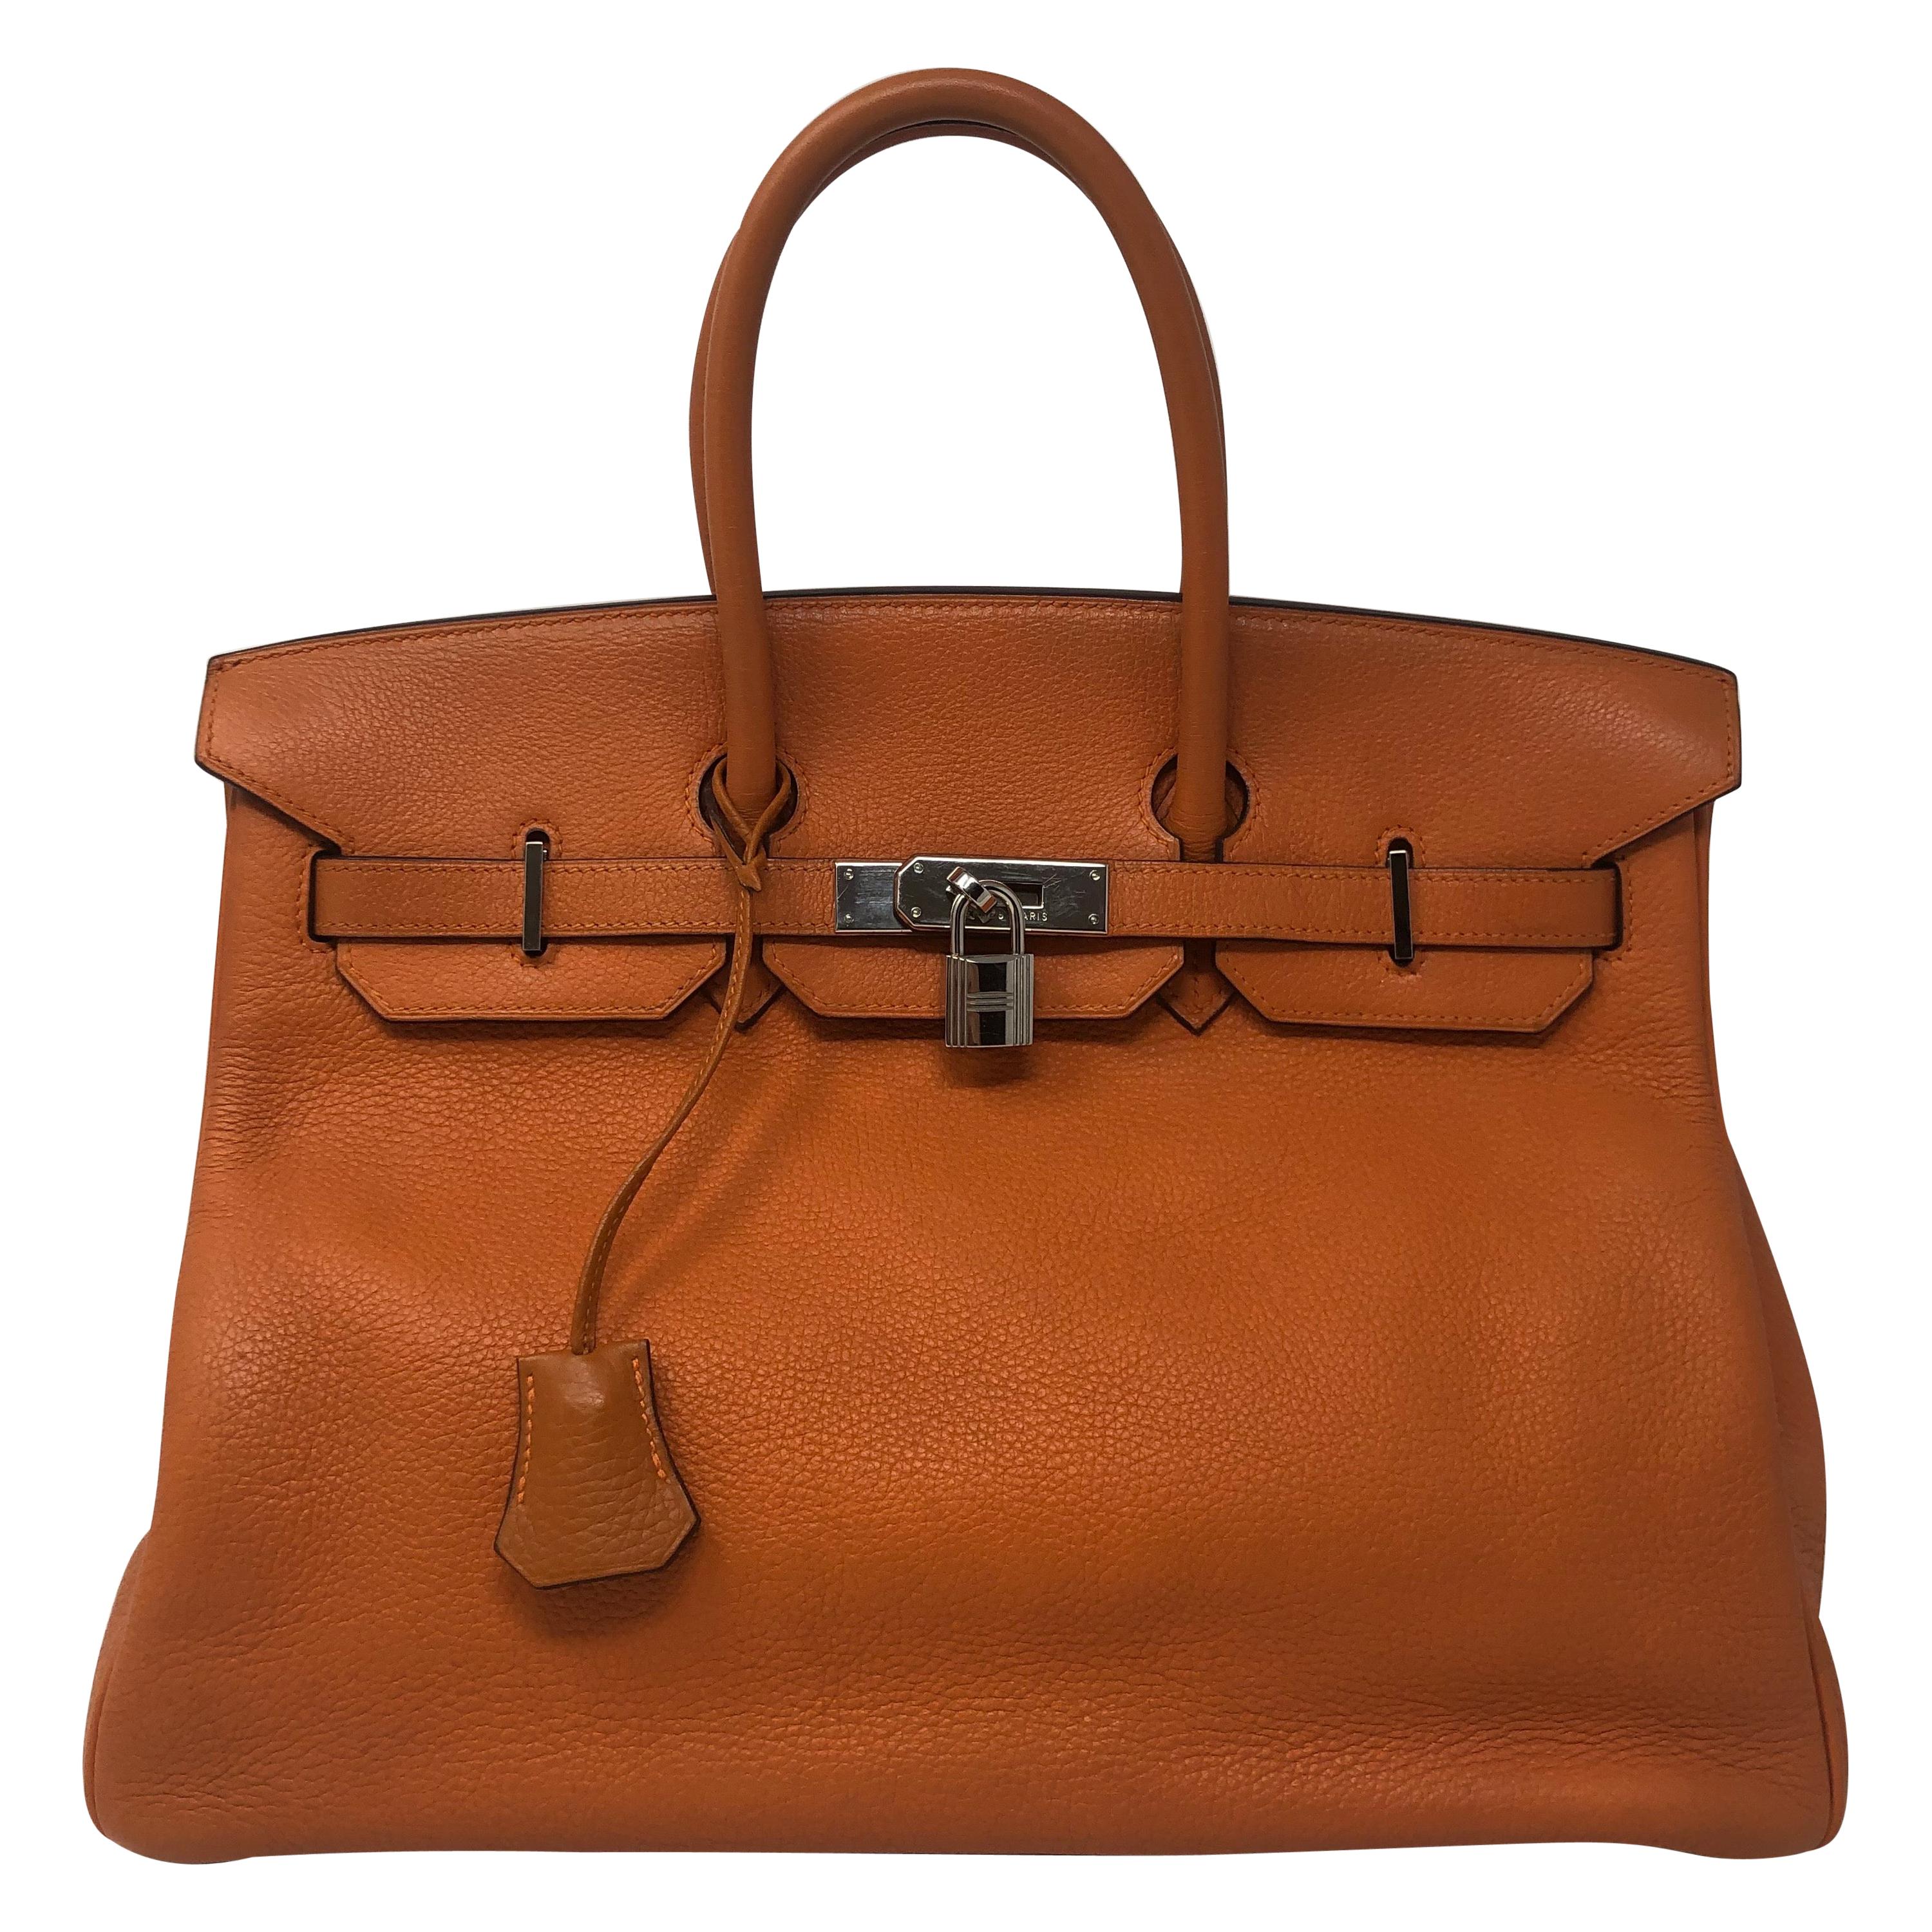 Hermes Birkin Orange 35 Bag 